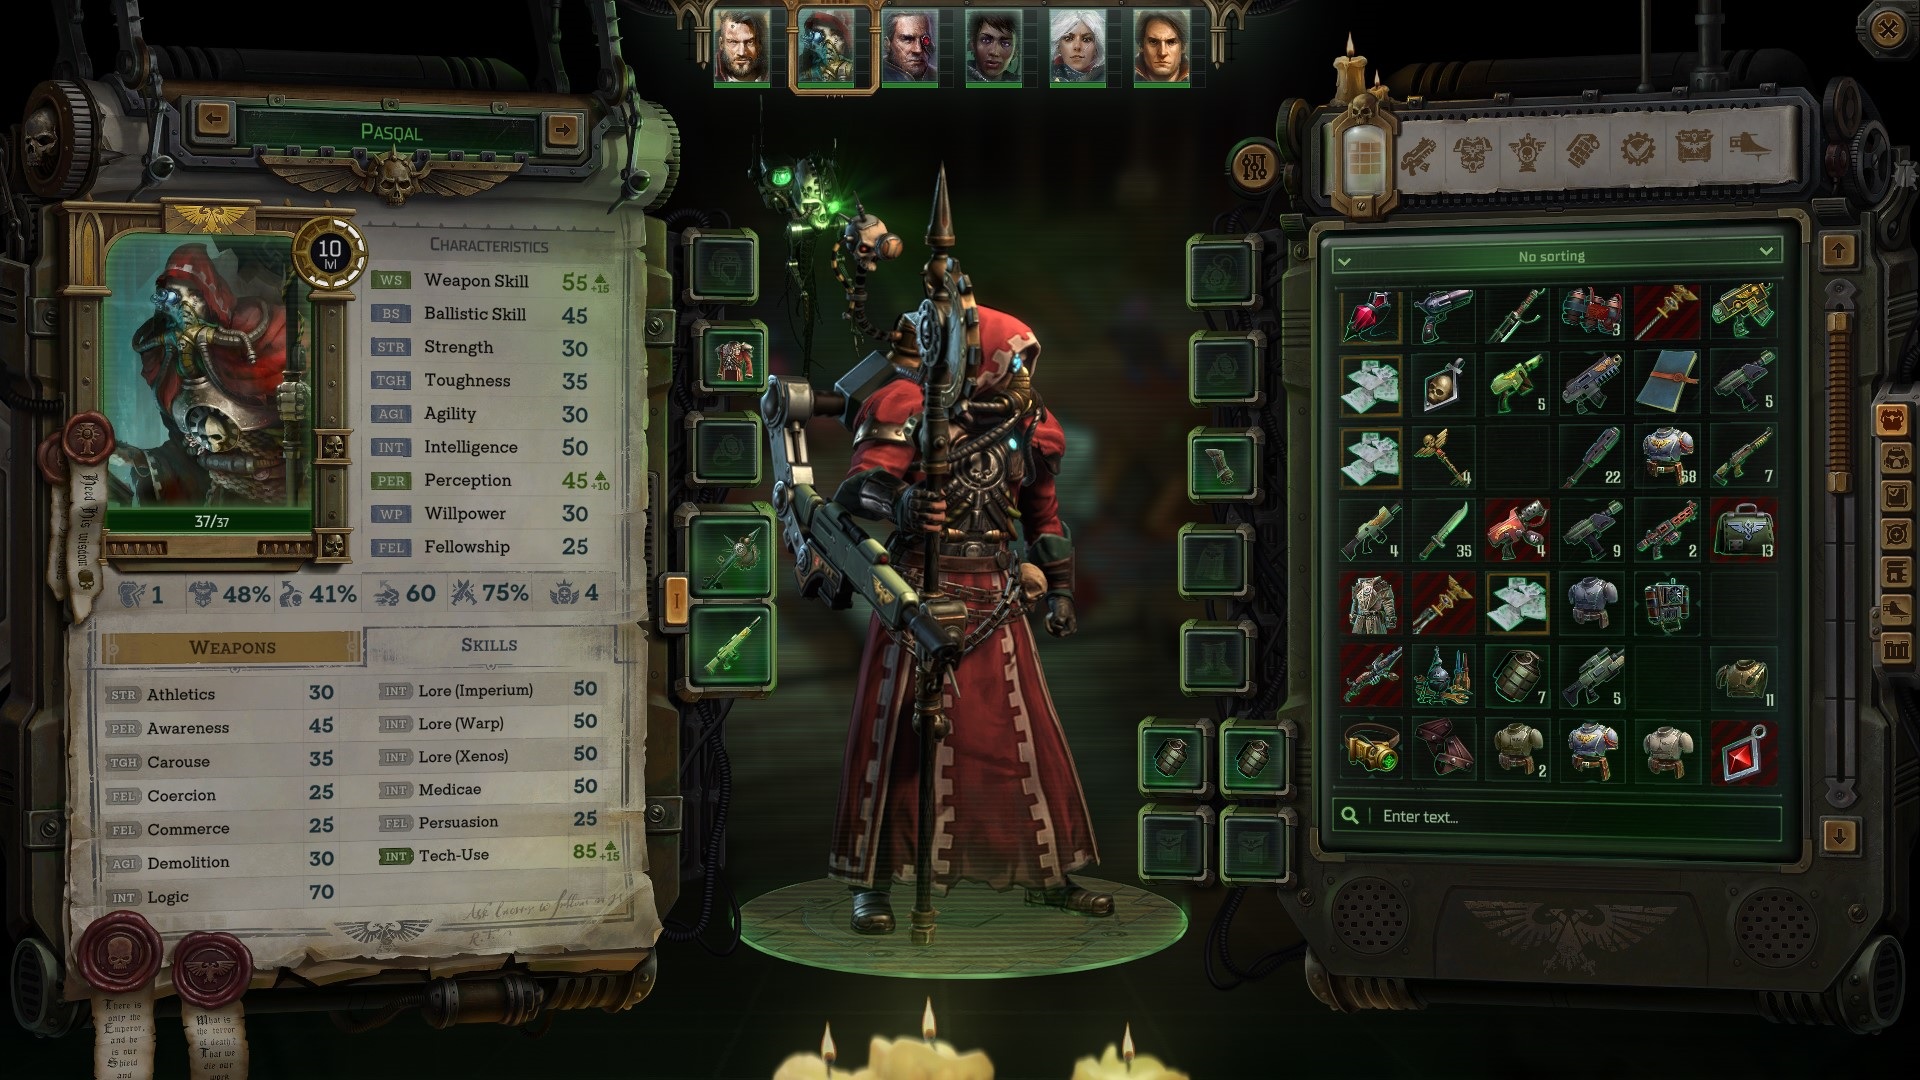 Warhammer 40,000: inventario de Rogue Trader Pasqal